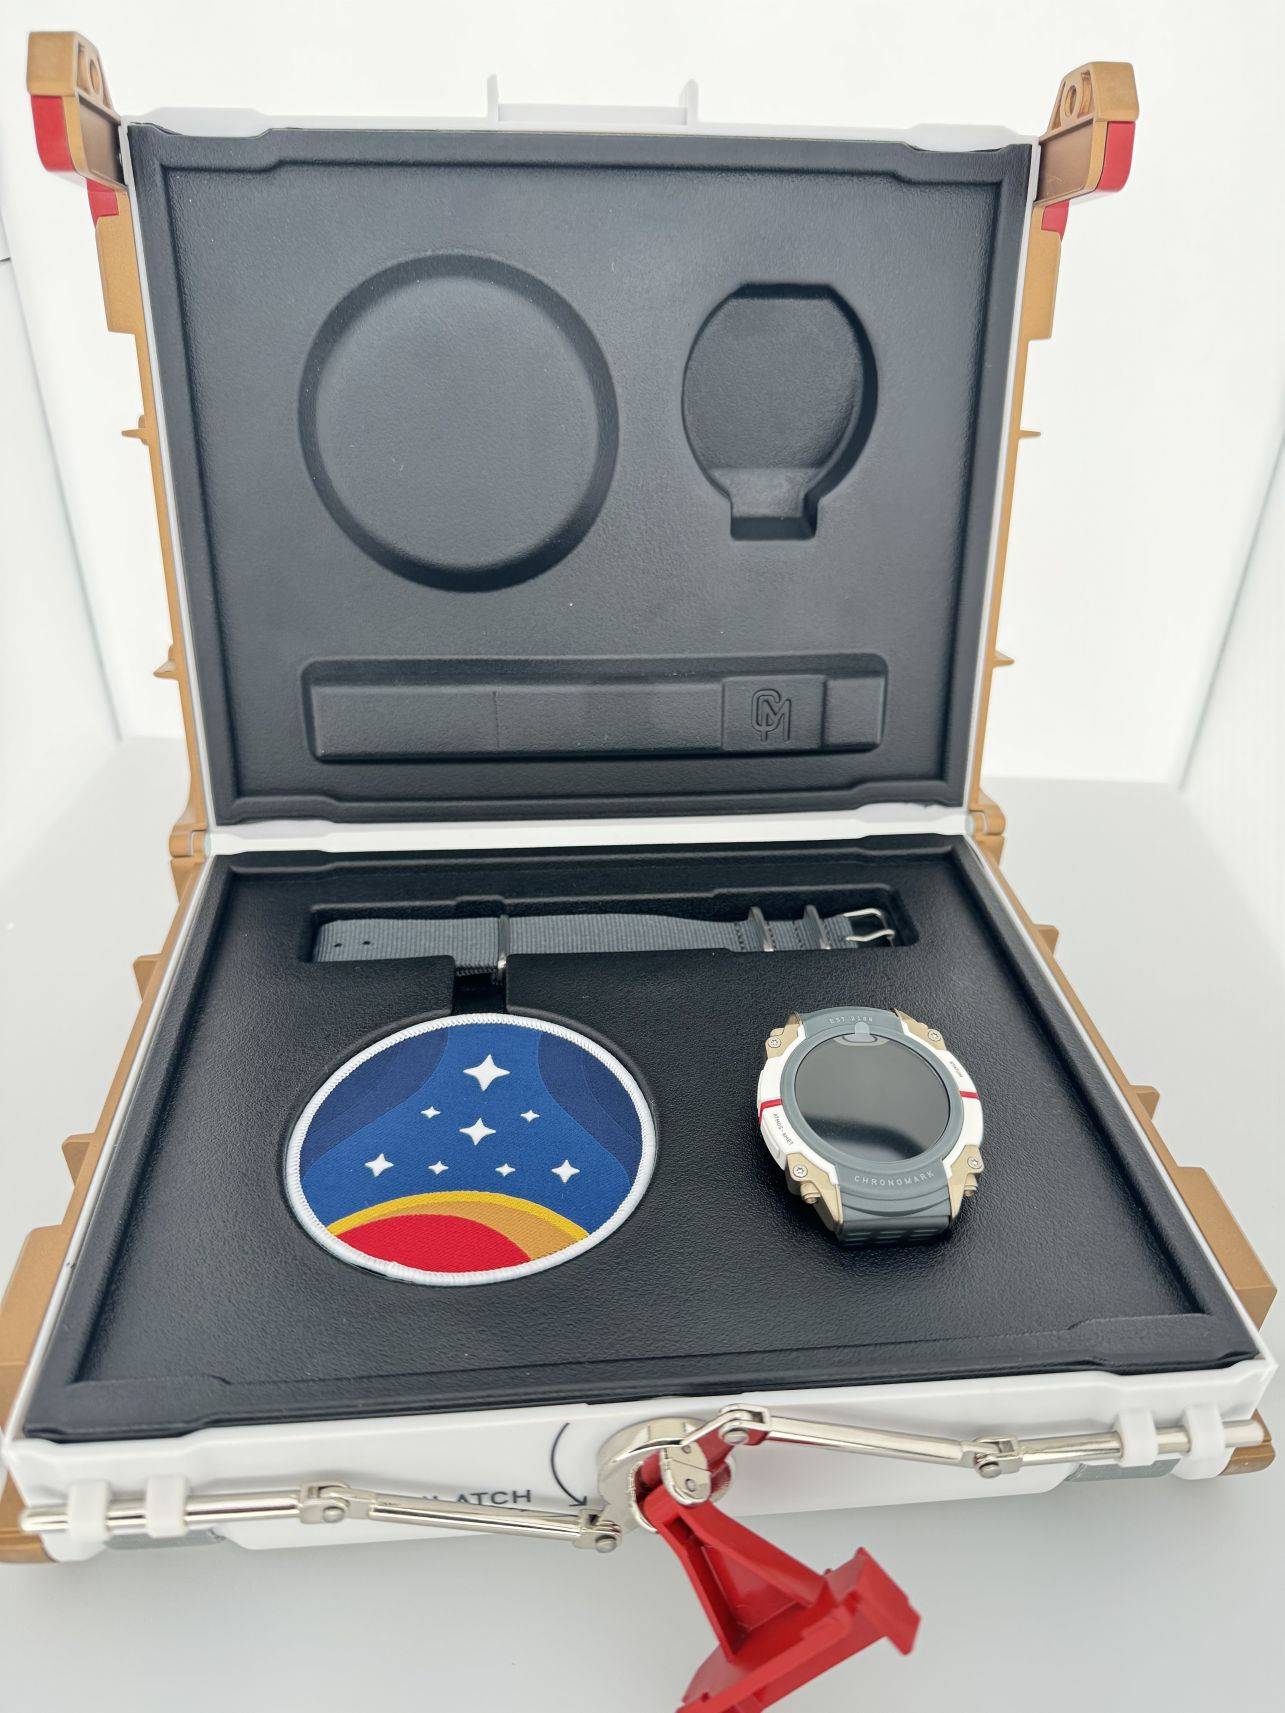 《 Starfield 星空 》典藏版开箱 方便操作的智能手表